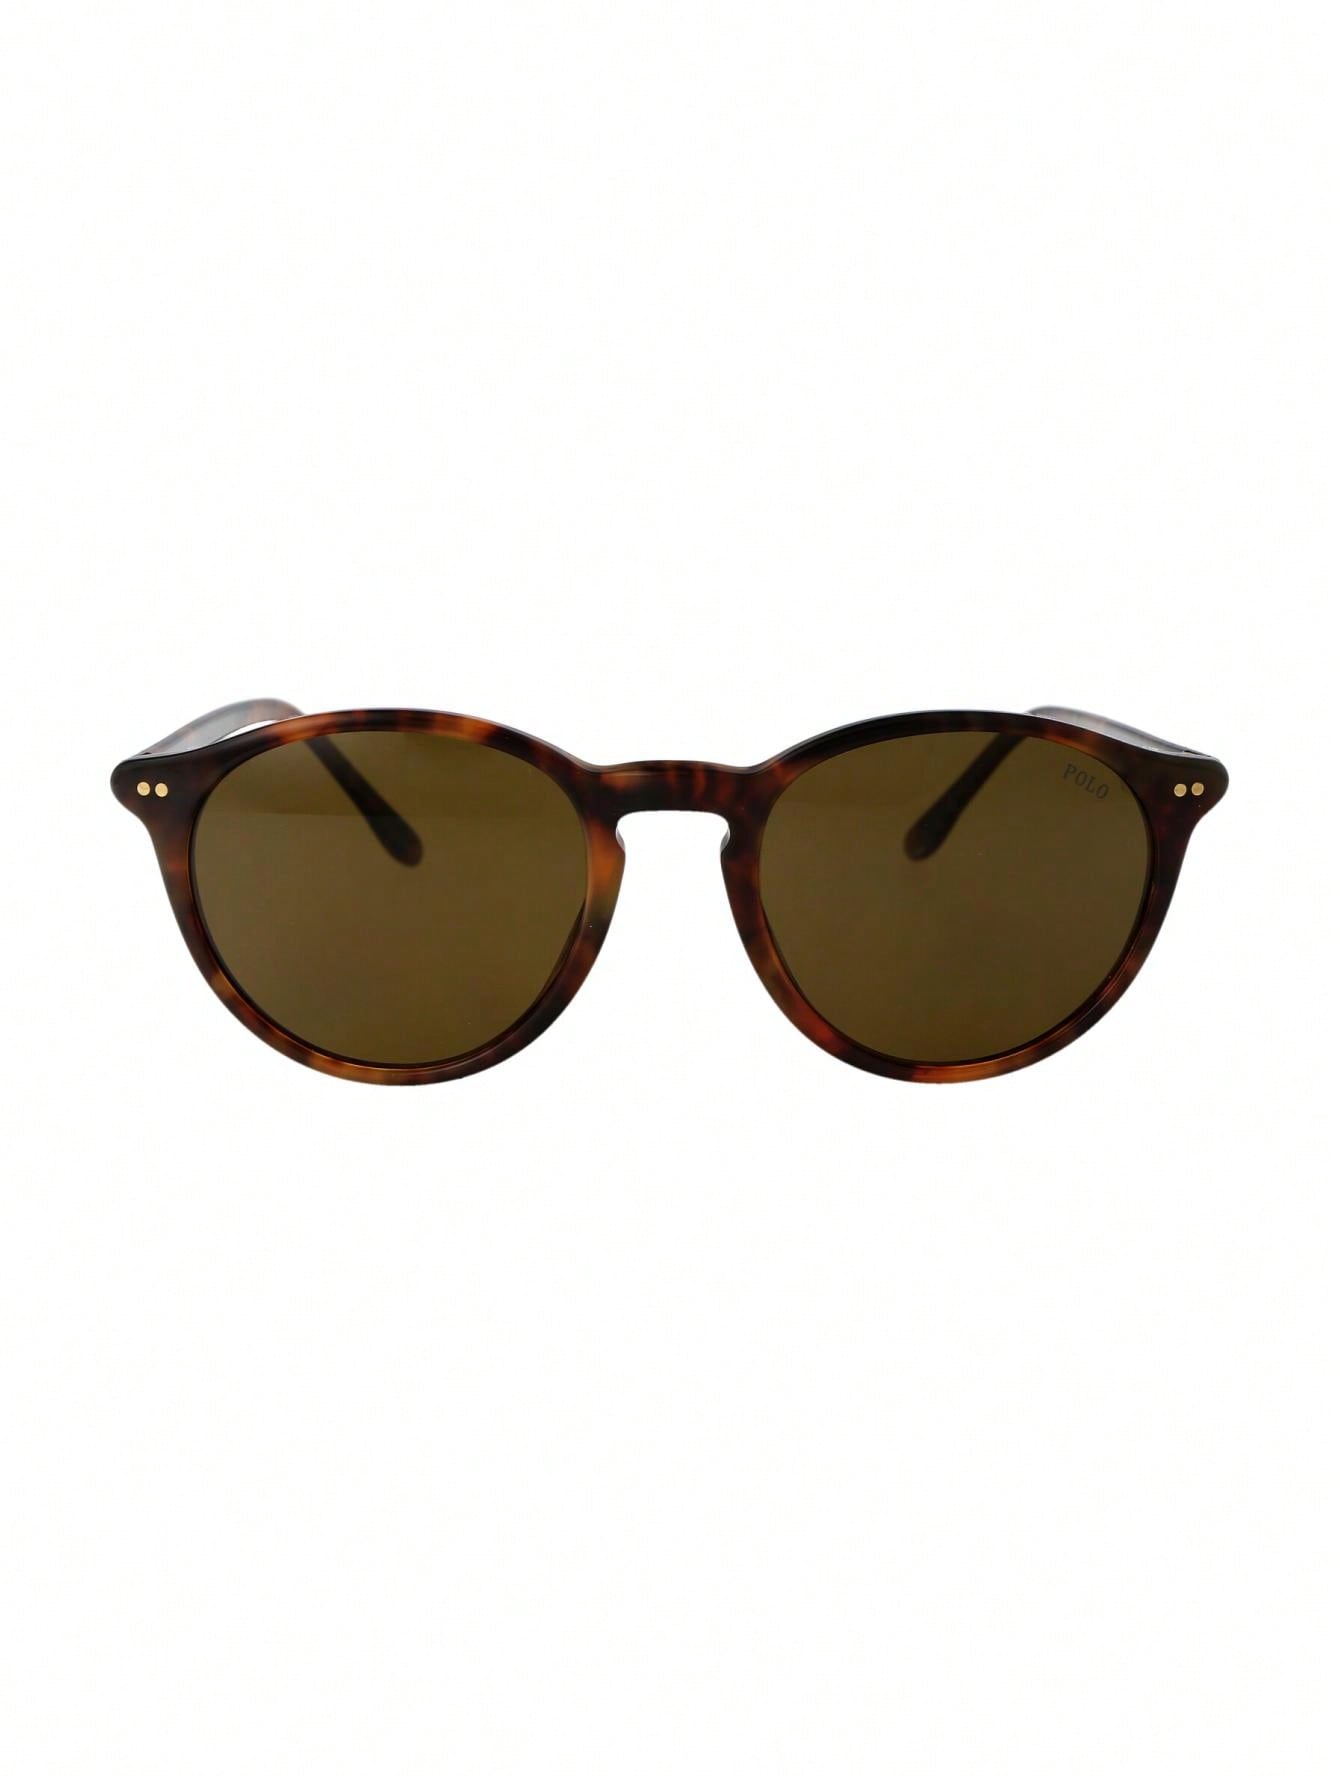 Мужские солнцезащитные очки Polo Ralph Lauren DECOR 0PH4193501773, многоцветный очки солнцезащитные ralph anderl panto chrome blue